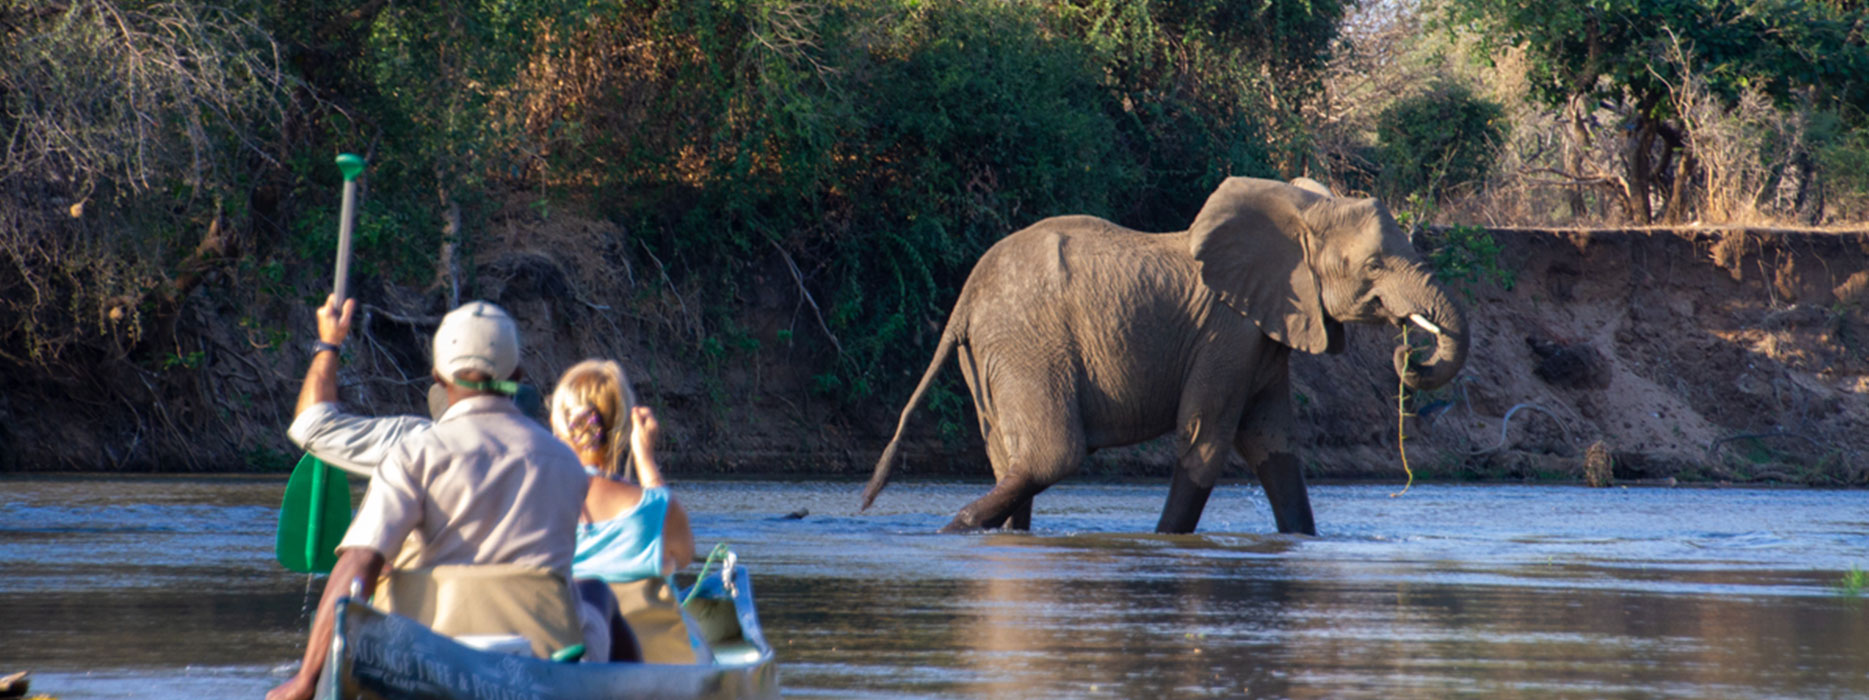 Canoeing in the Zambezi River in Zambia